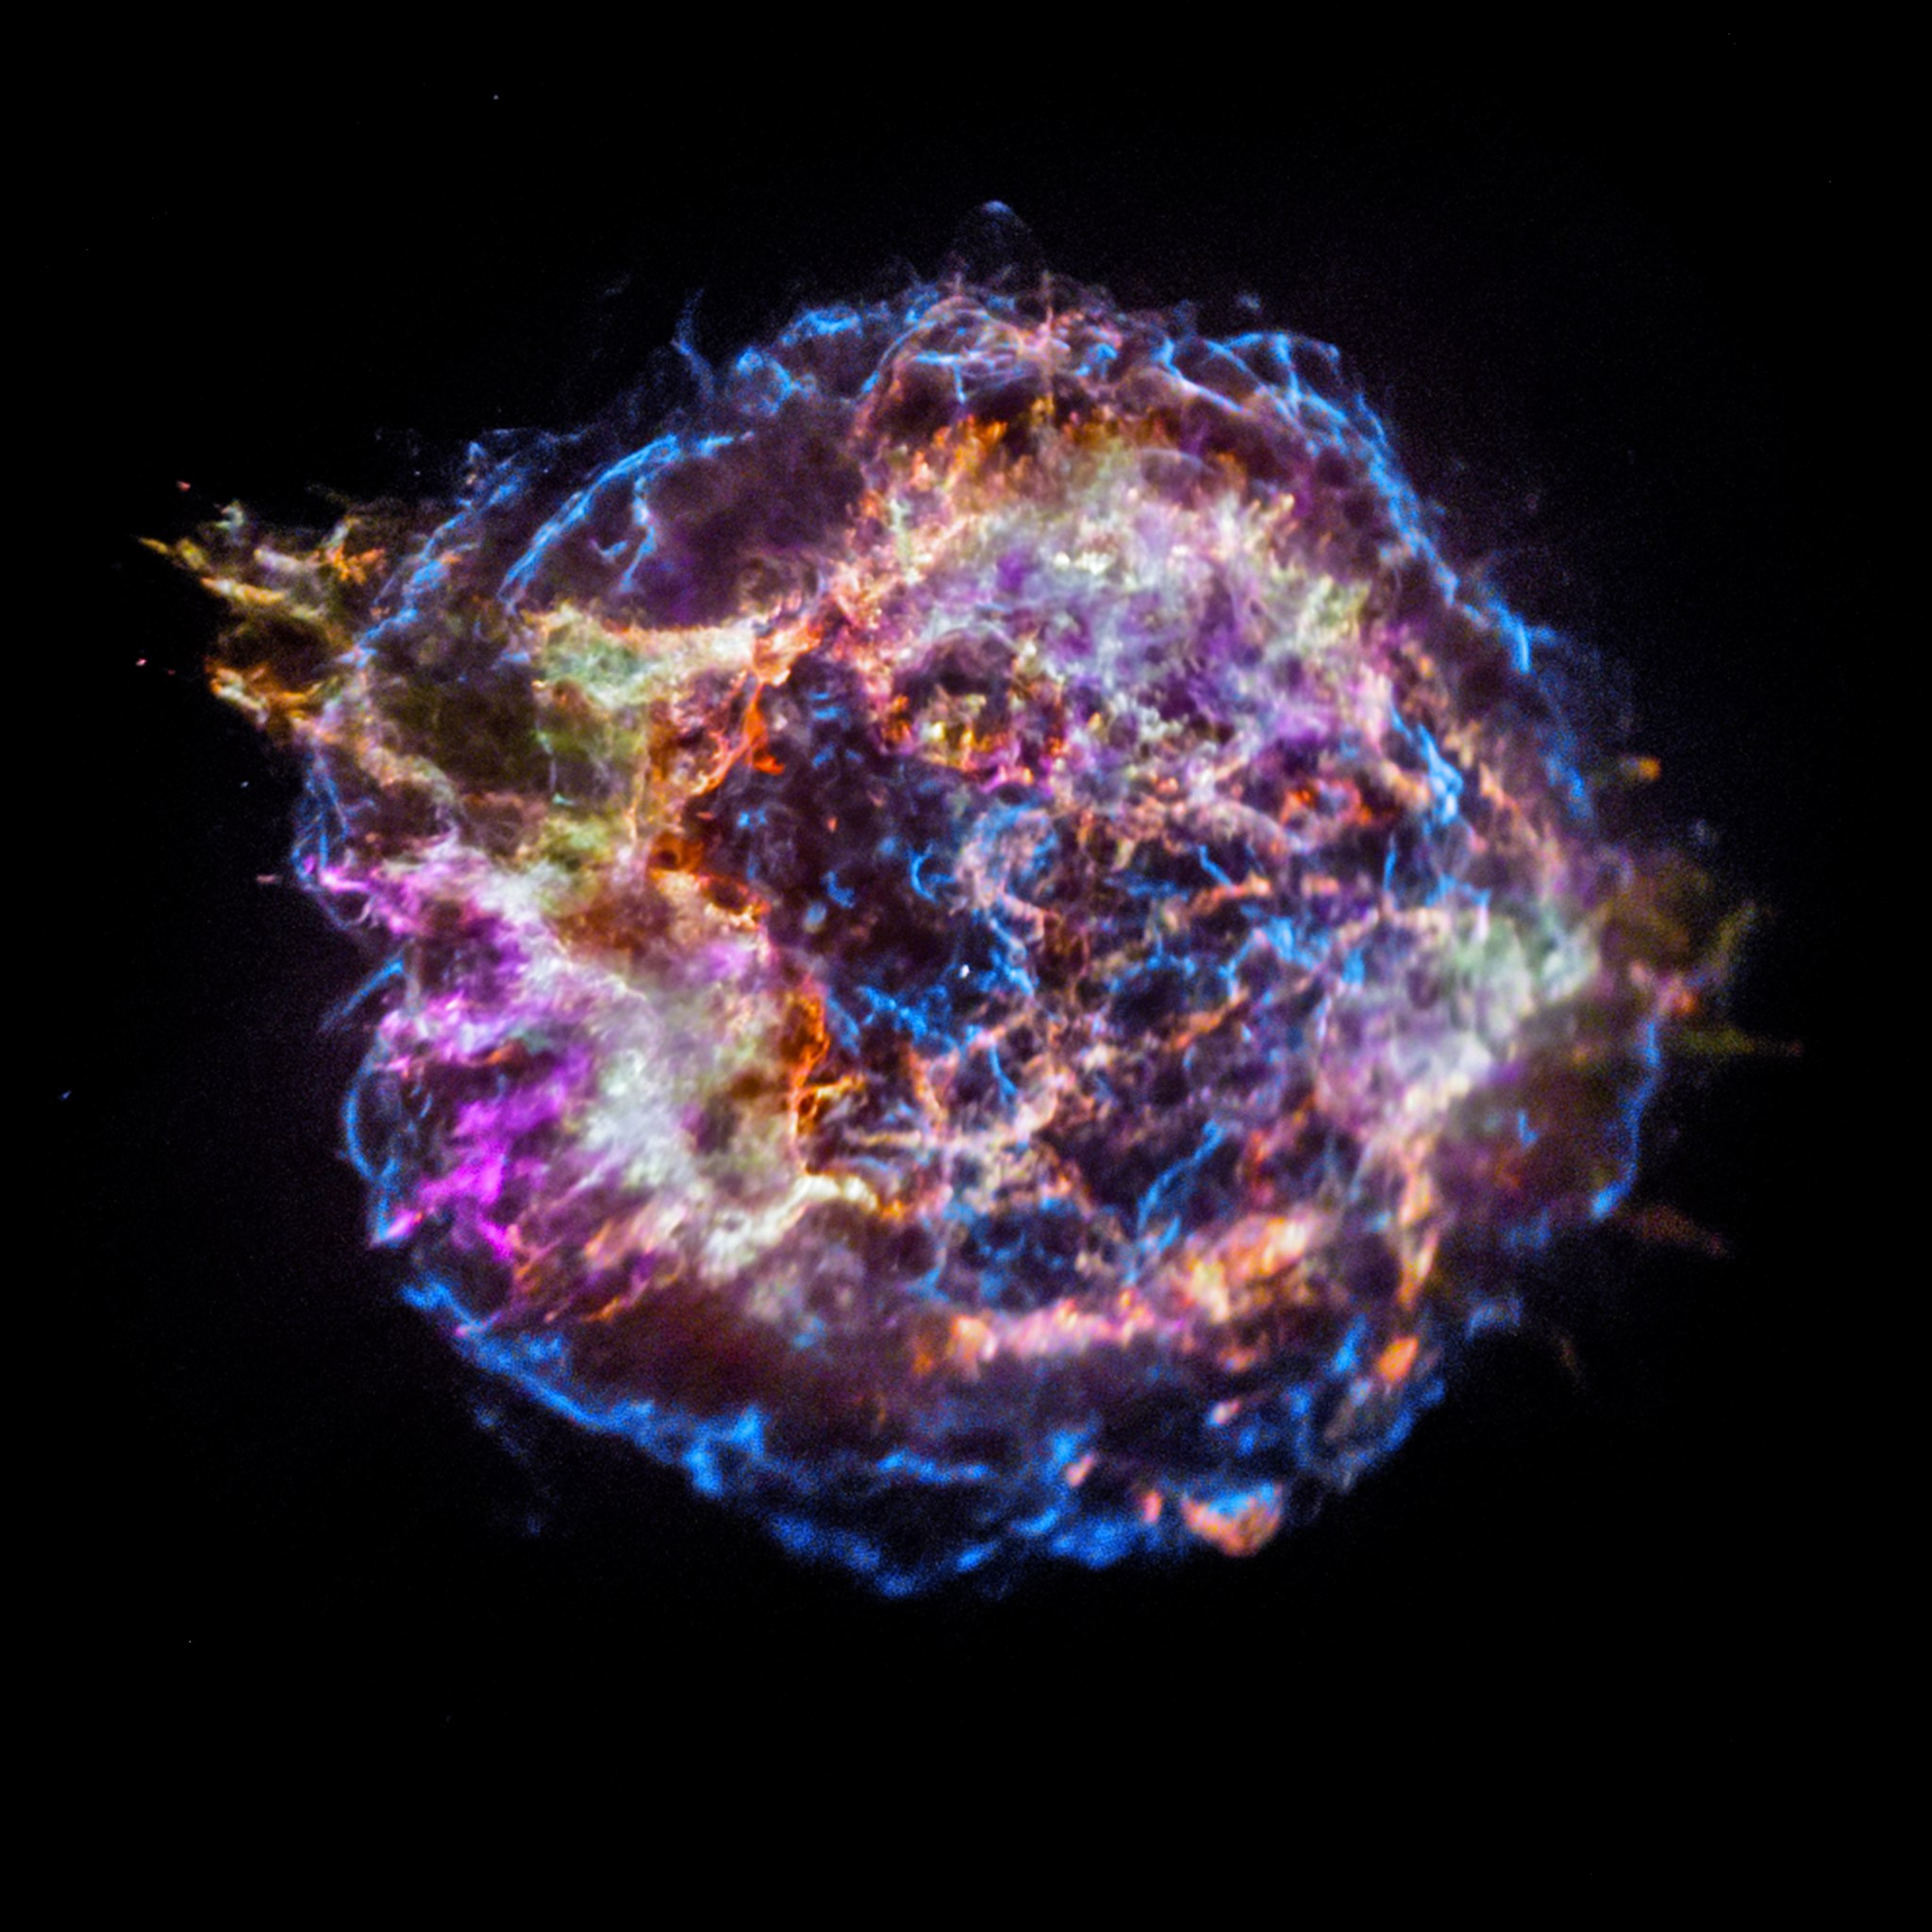 image of supernova remnant Cassiopeia A